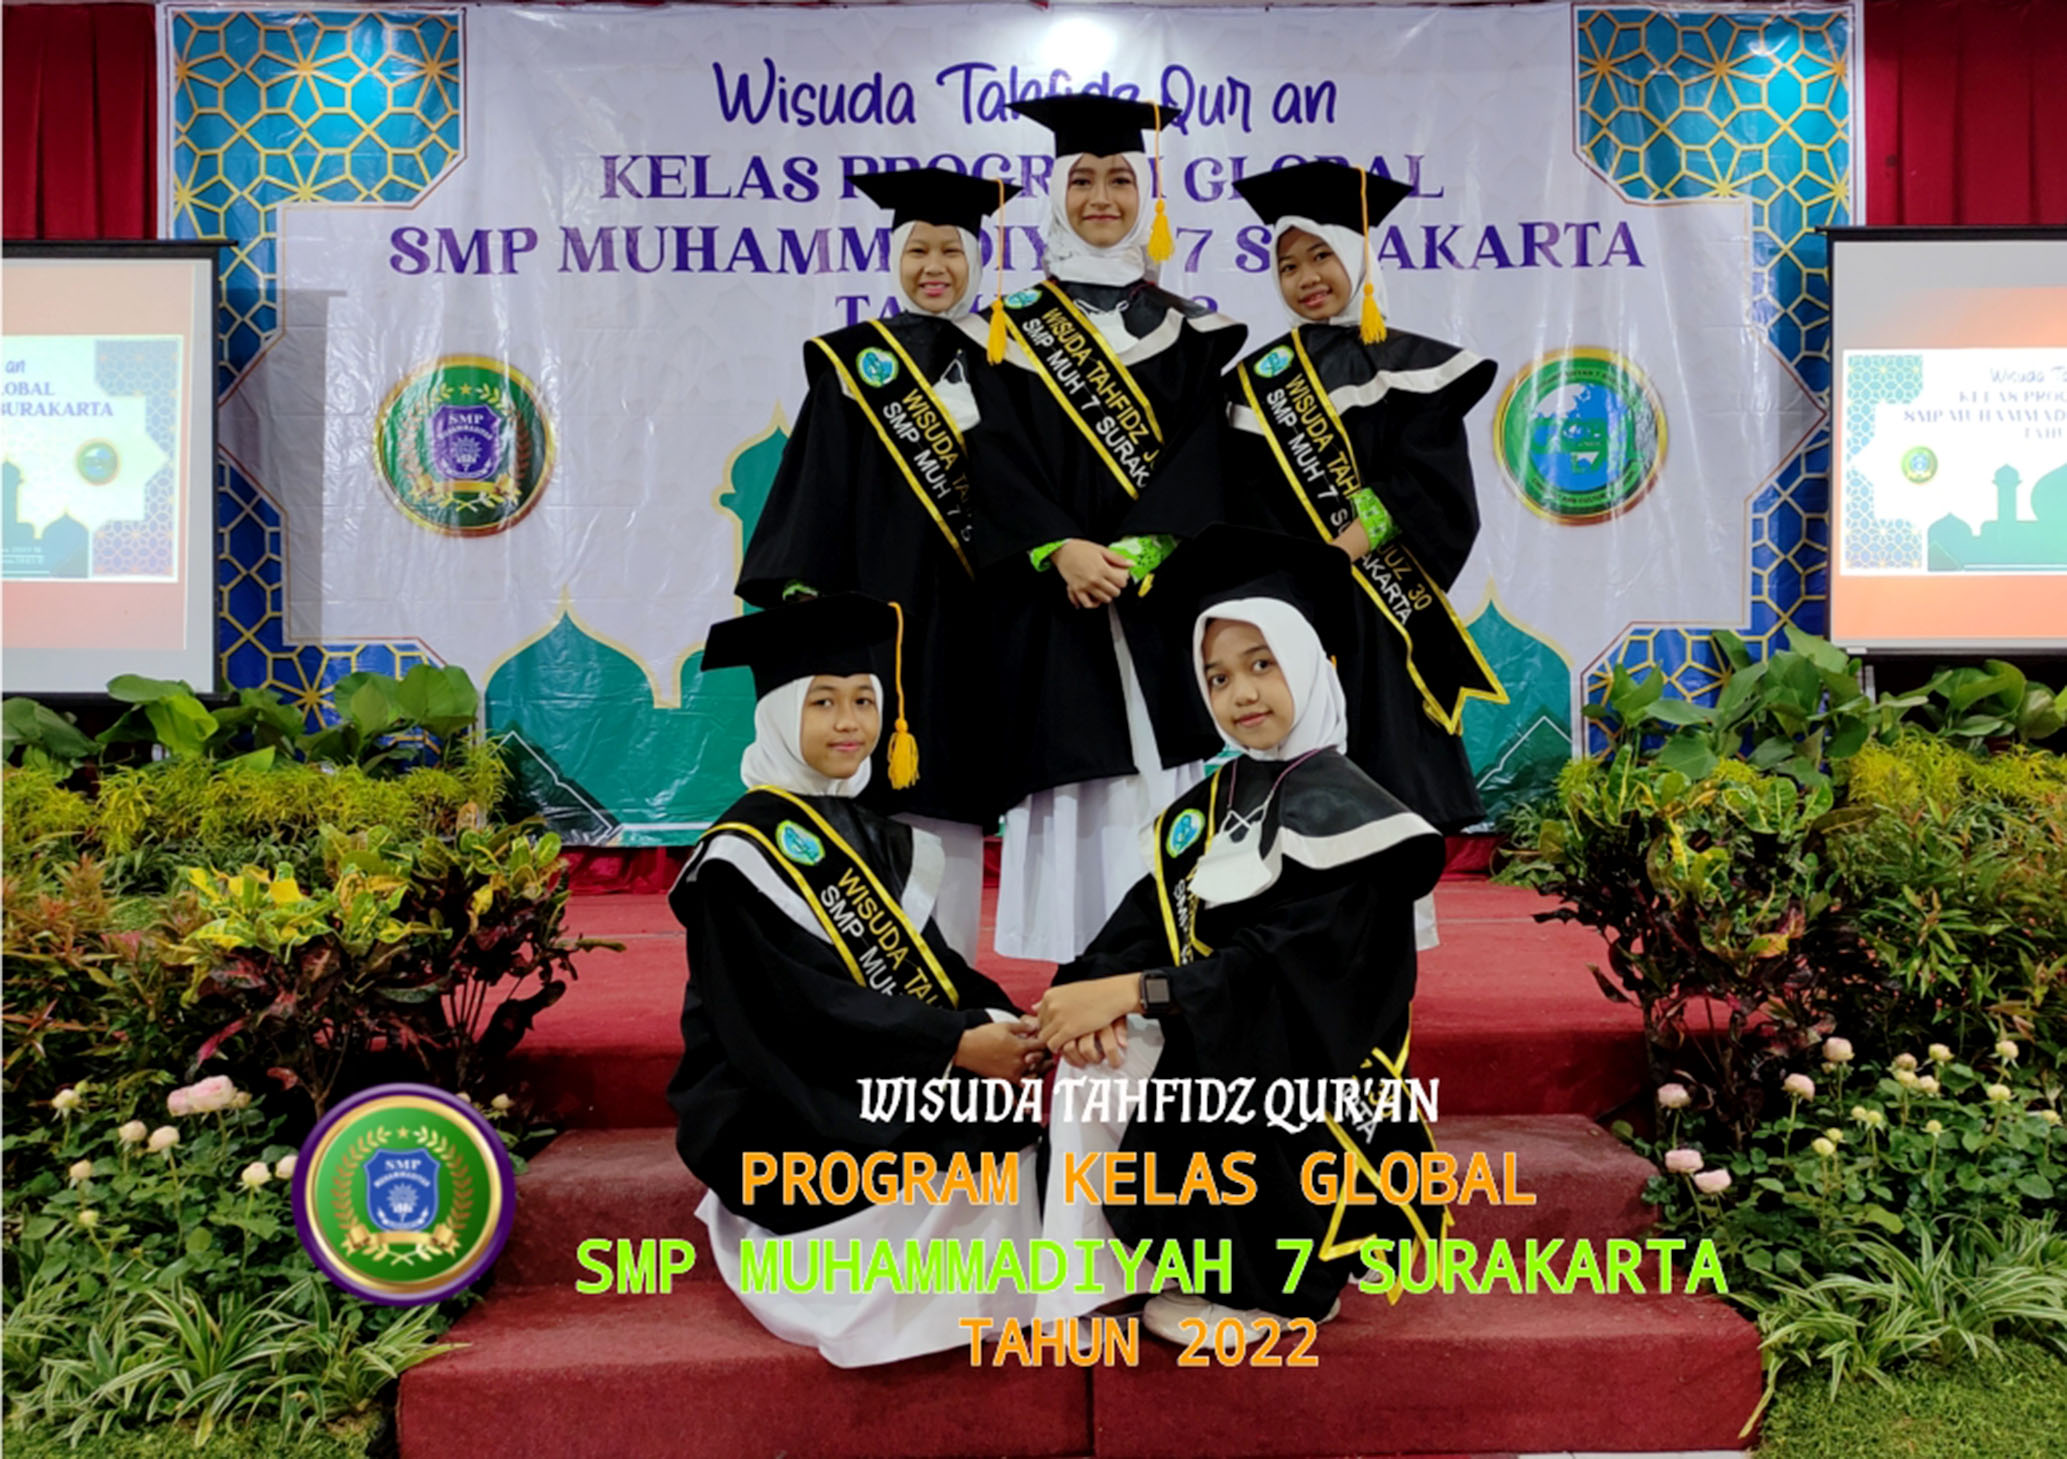 89 Siswa SMP Muhammadiyah 7 Solo Ikuti Wisuda Tahfiz Quran